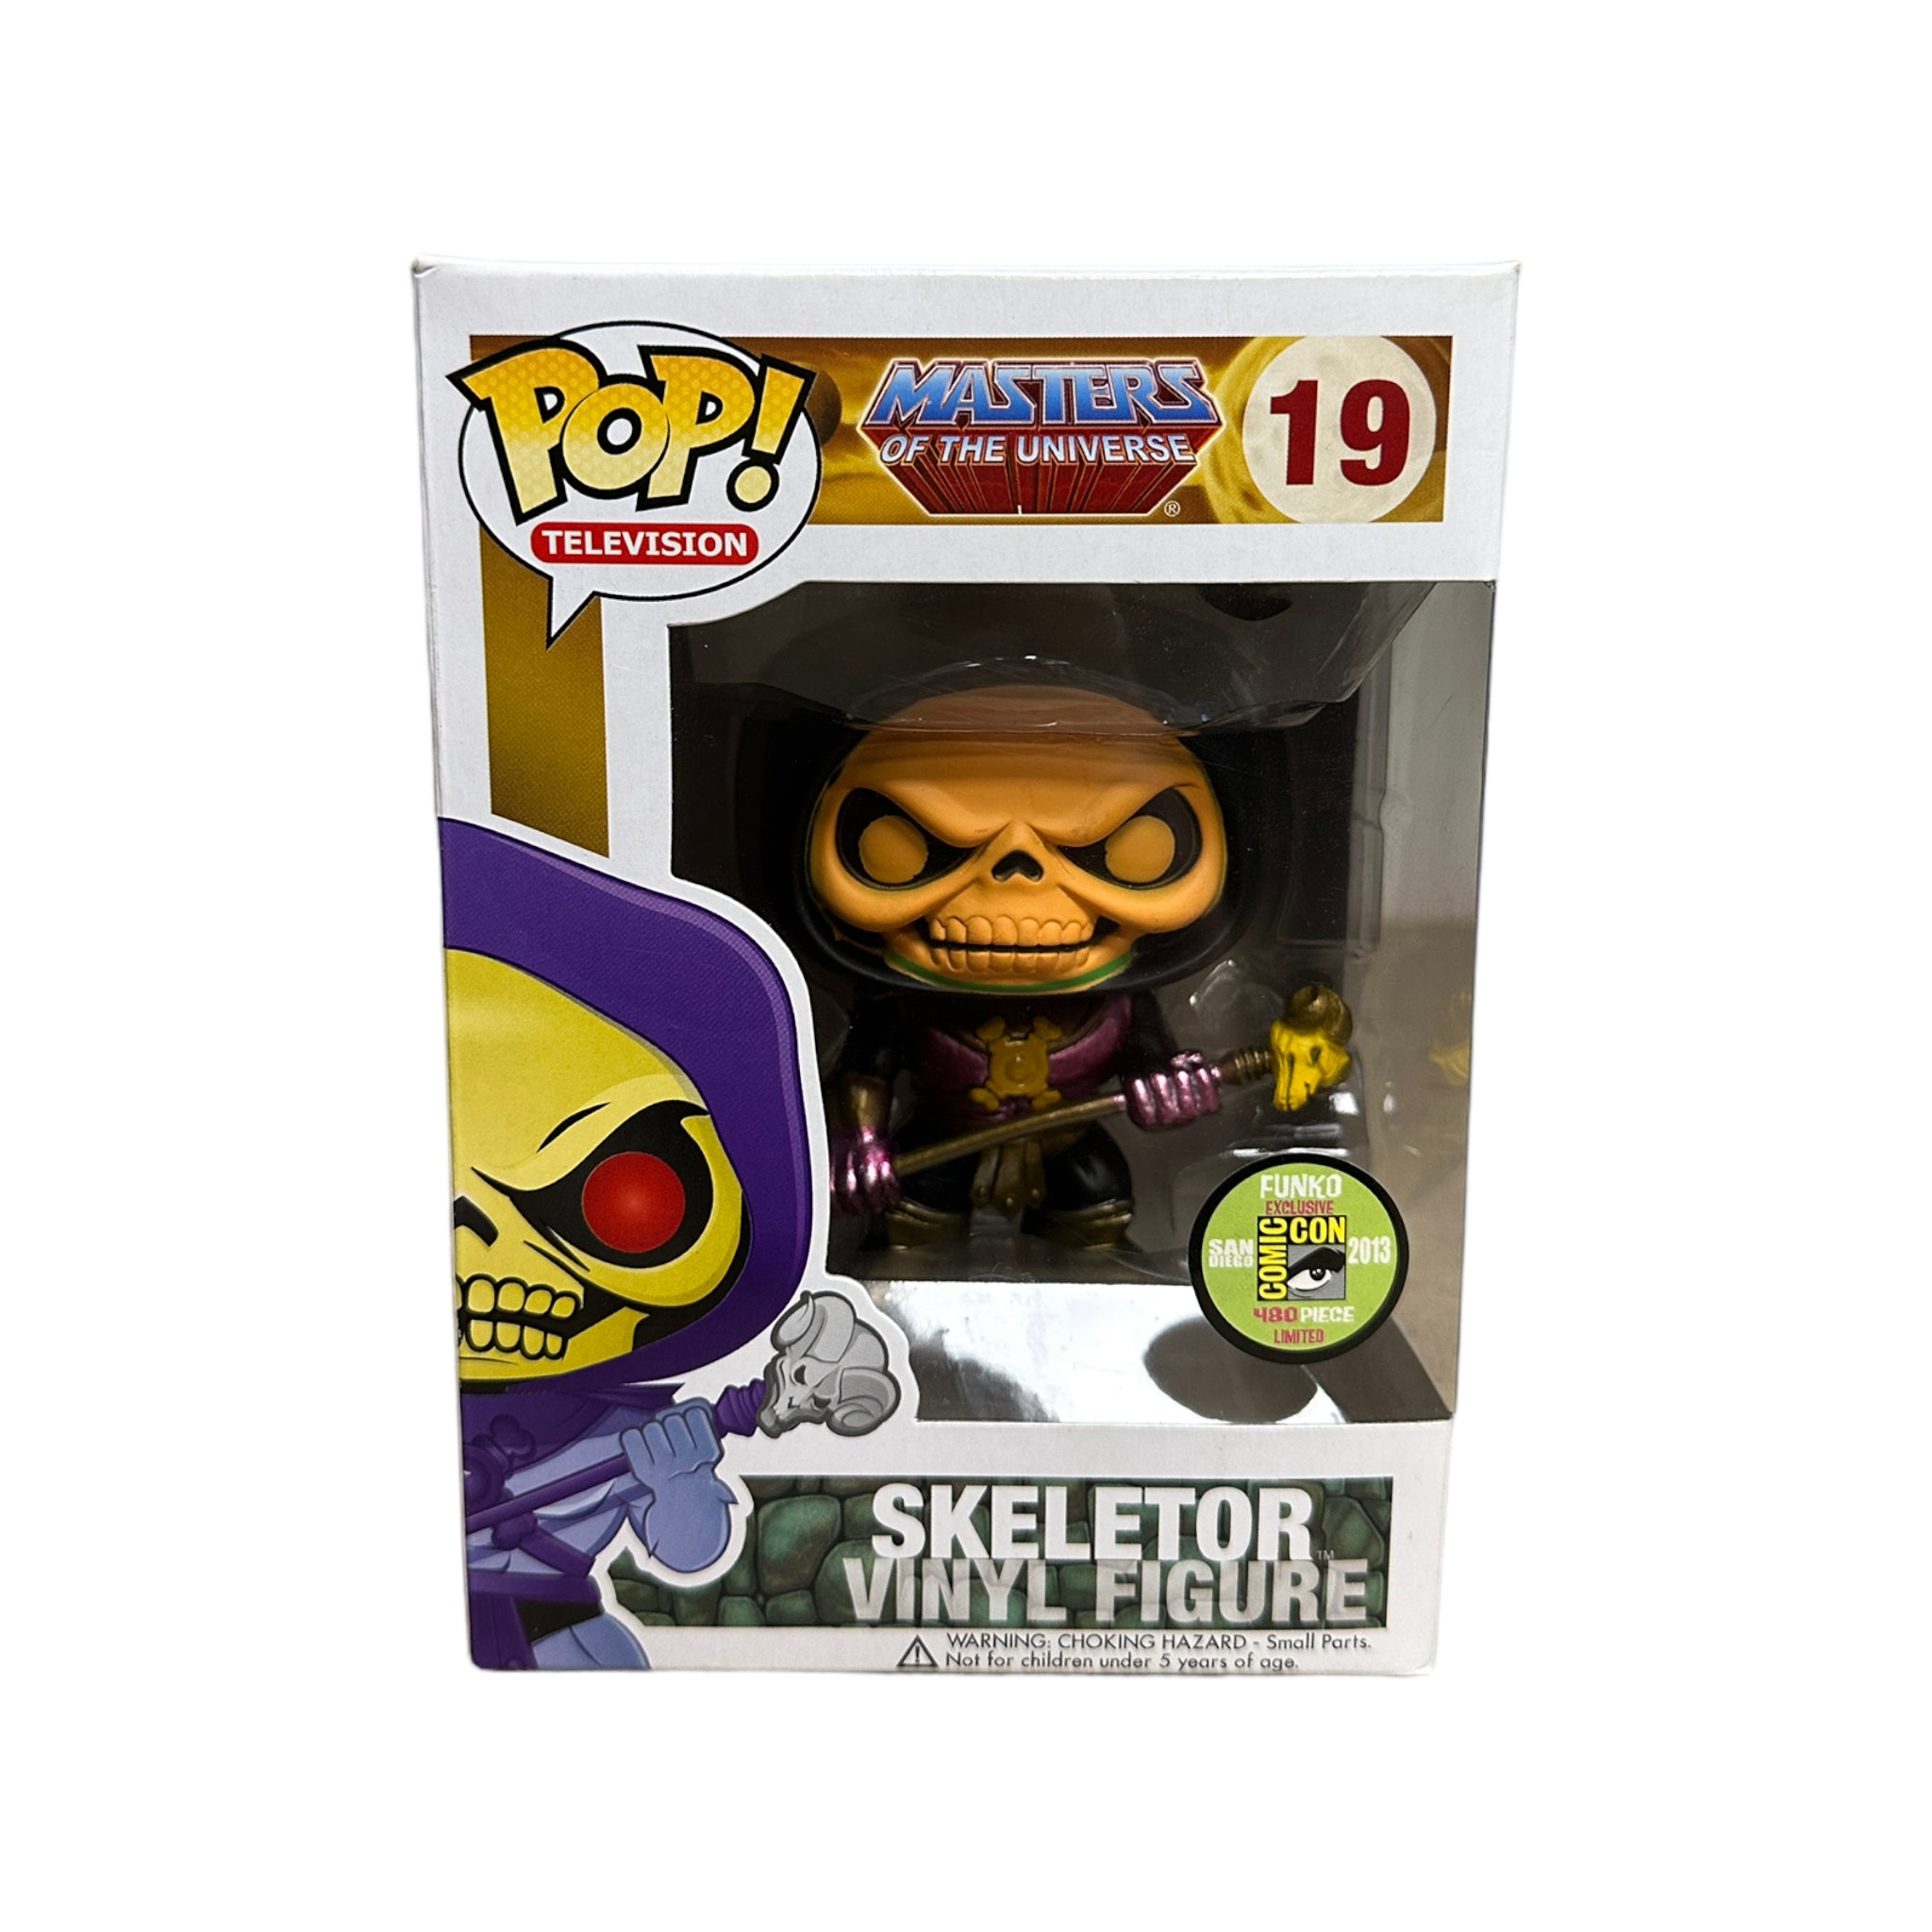 Skeletor #19 (Disco) Funko Pop! - Masters of The Universe - SDCC 2013 Exclusive LE480 Pcs - Condition 8/10